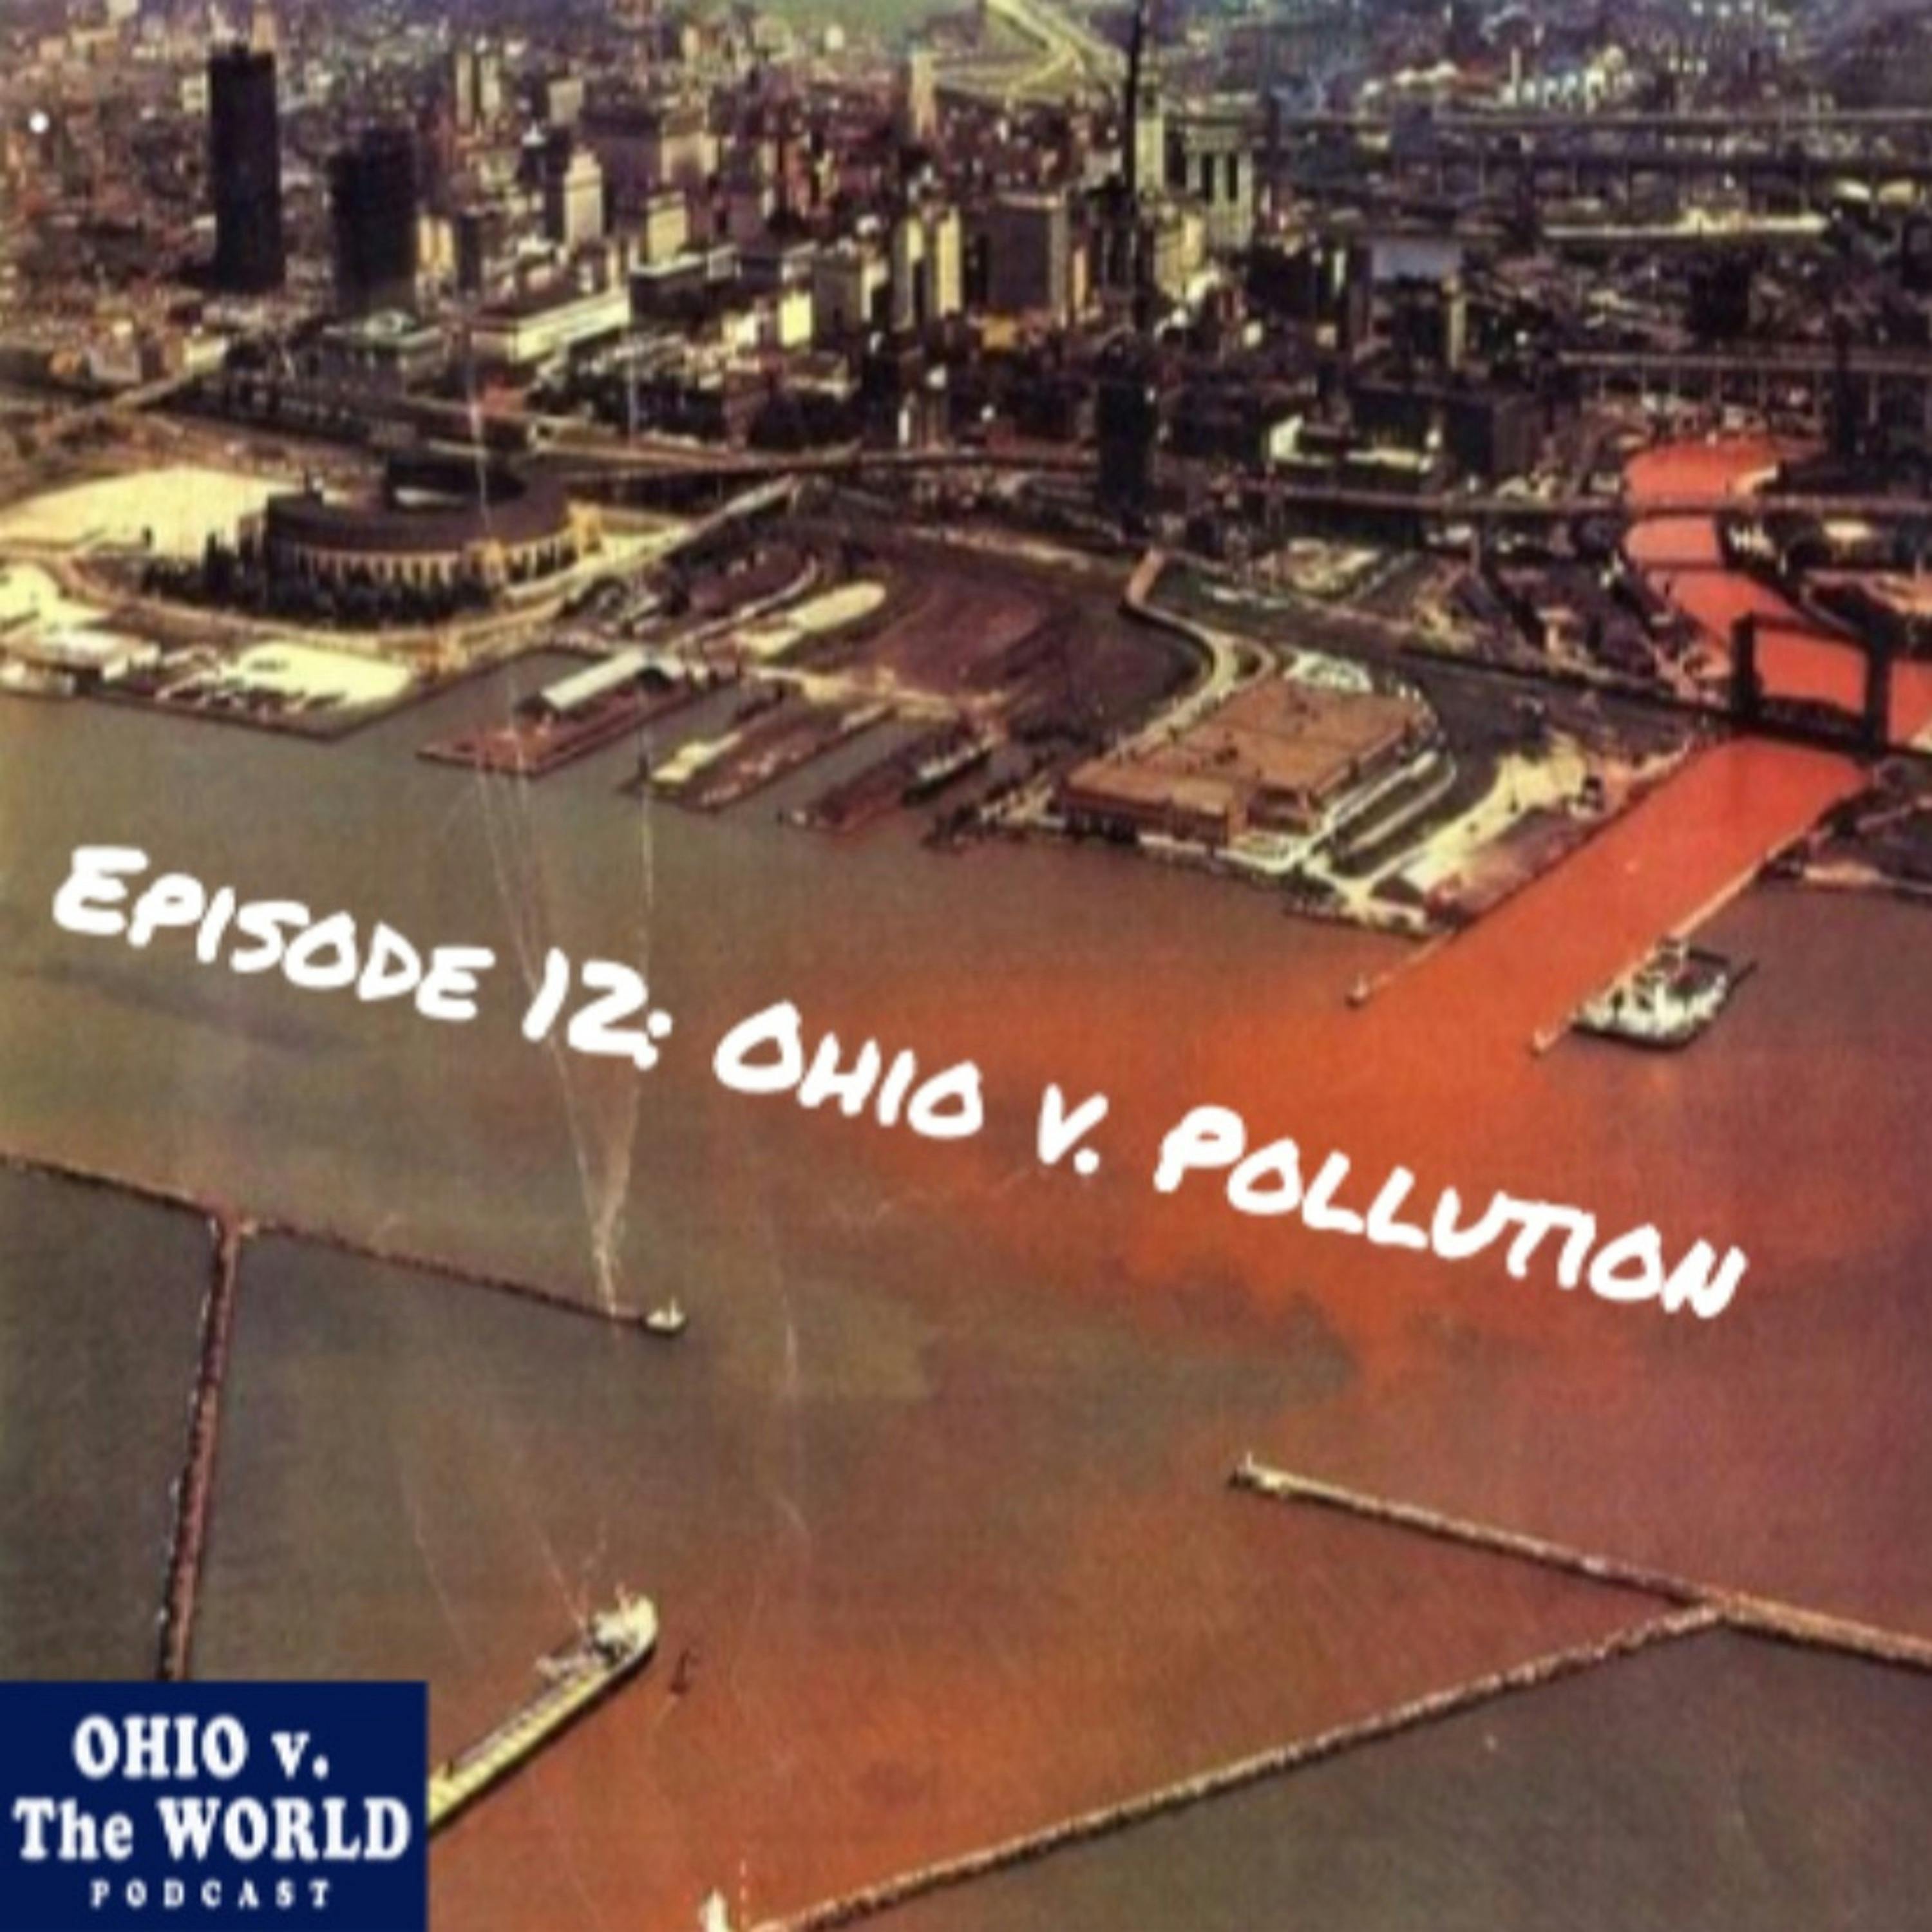 Episode 12: Ohio v. Pollution (Cuyahoga River Fire)